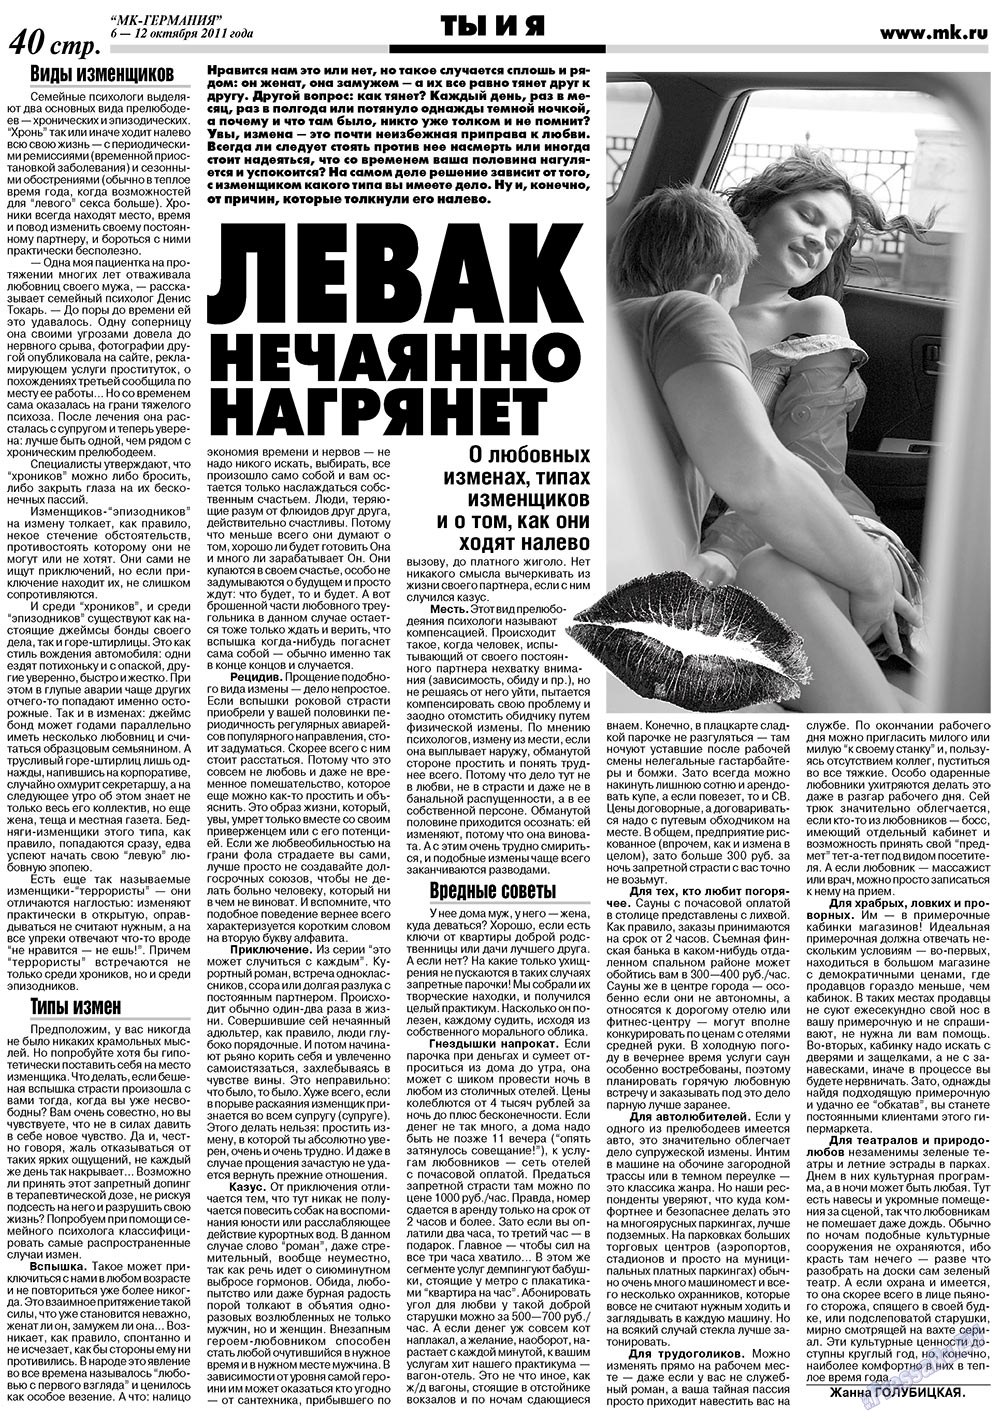 МК-Германия, газета. 2011 №40 стр.40